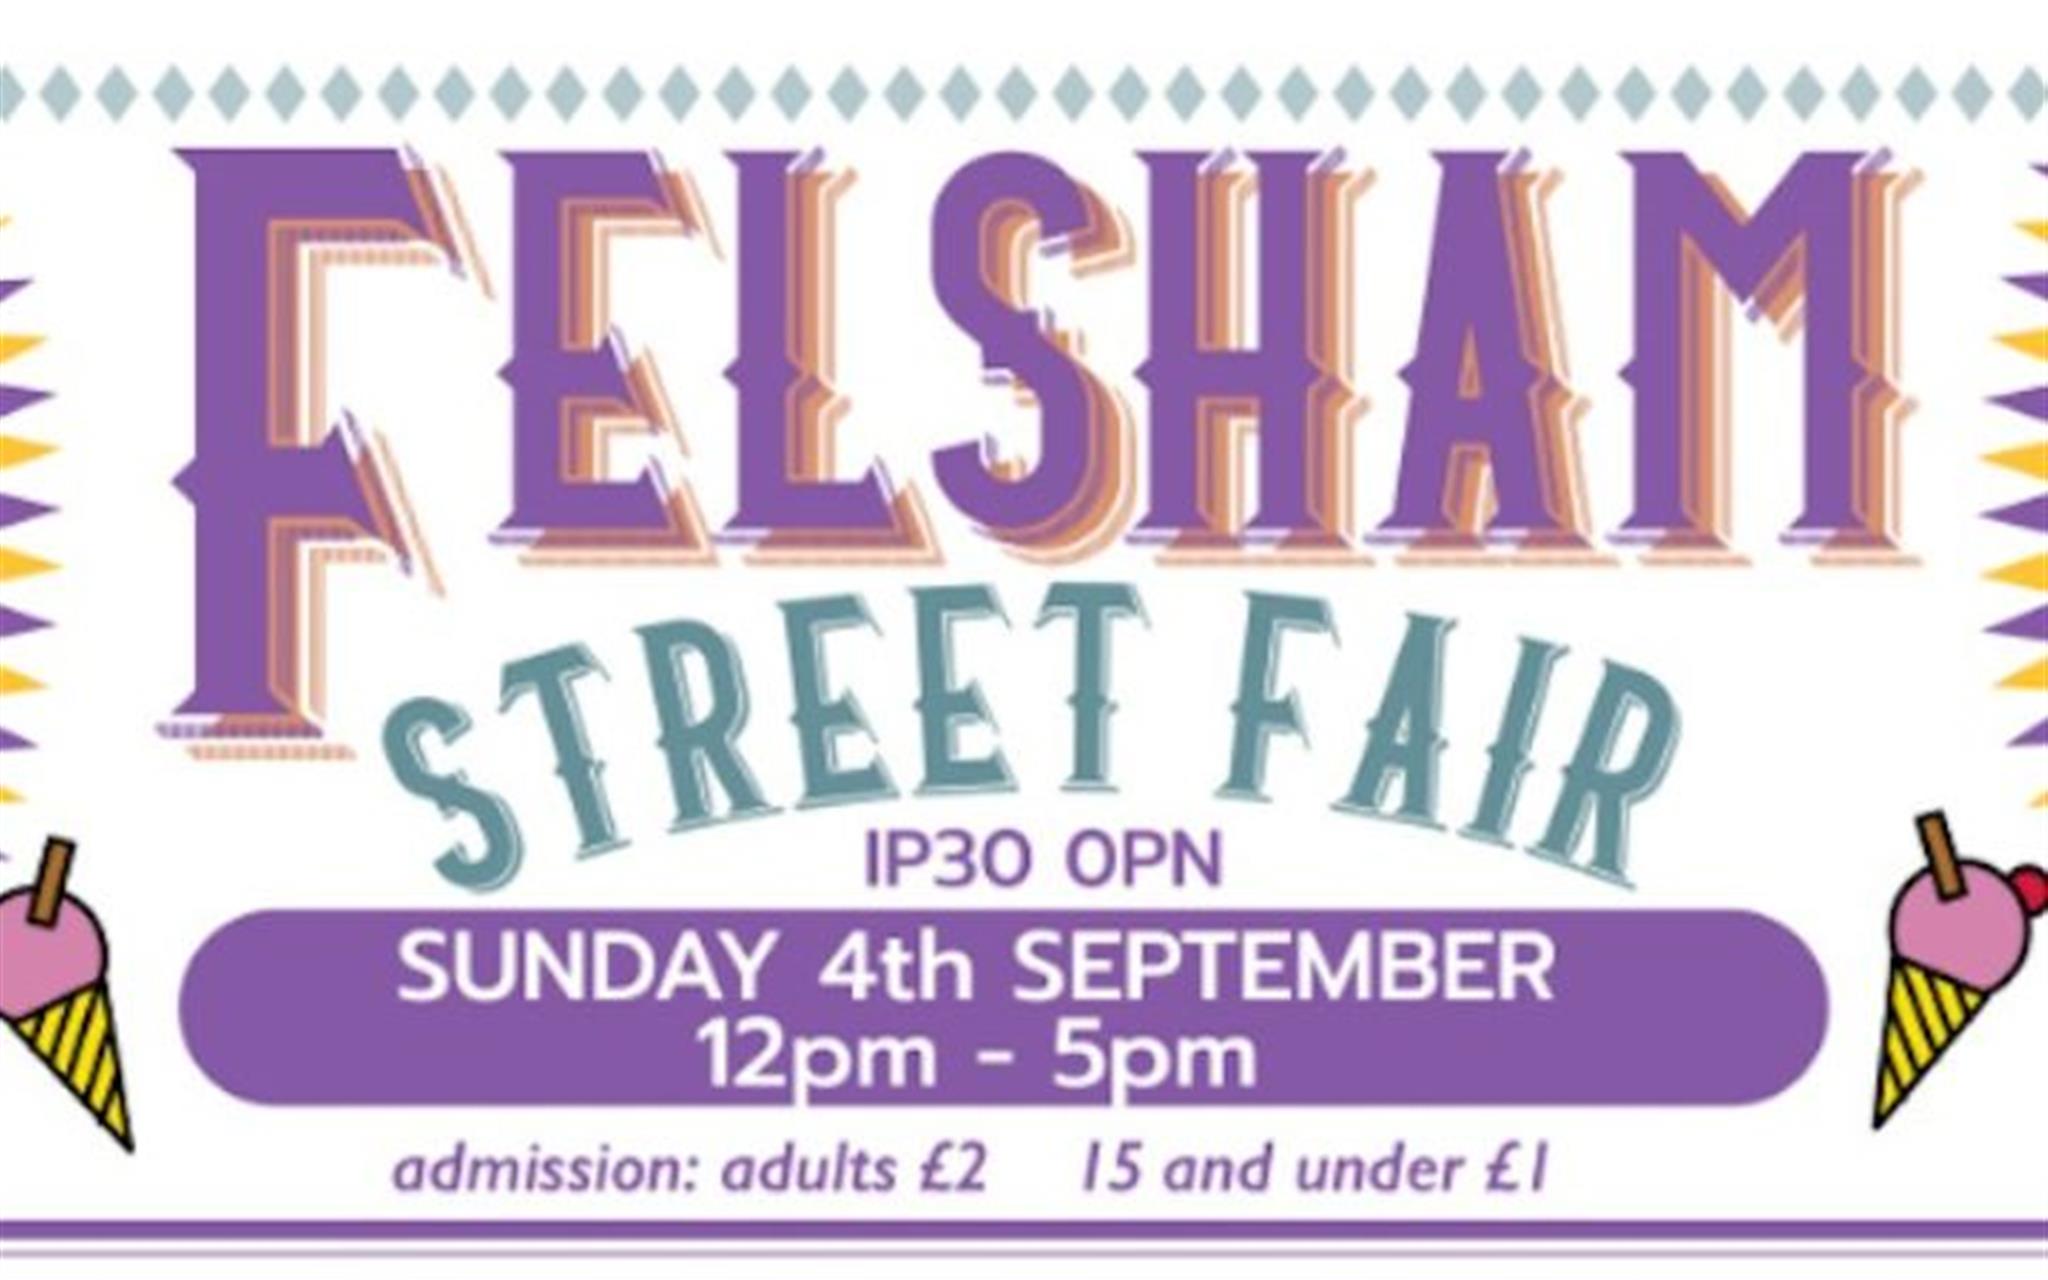 Felsham Street Fair image